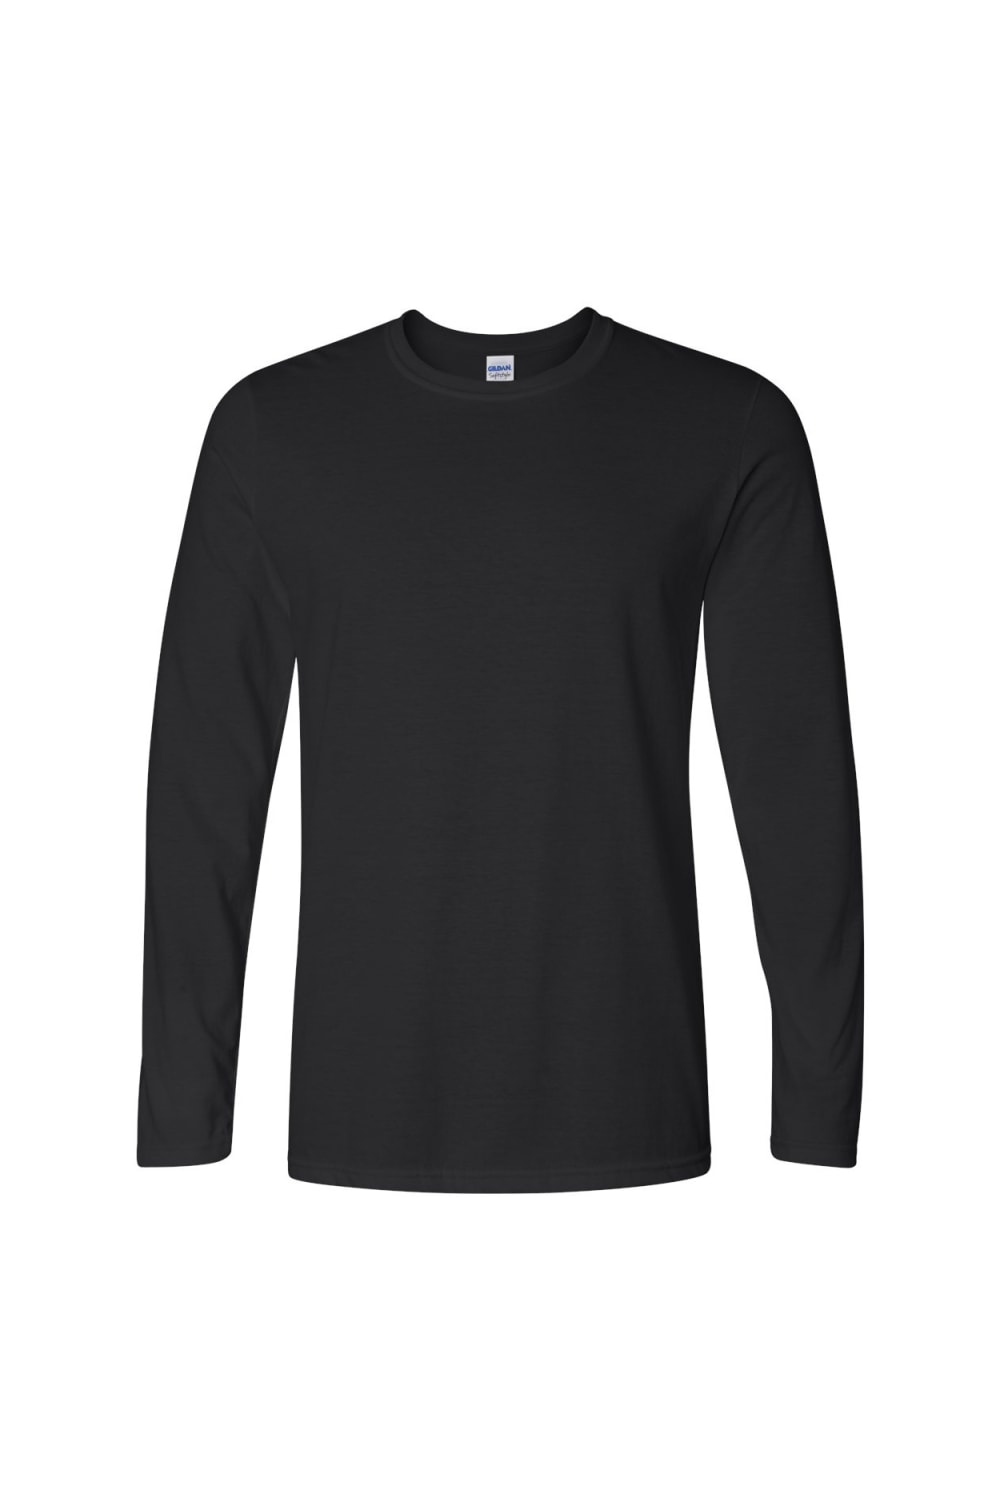 Gildan Mens Soft Style Long Sleeve T-Shirt (Pack of 5) (Black)